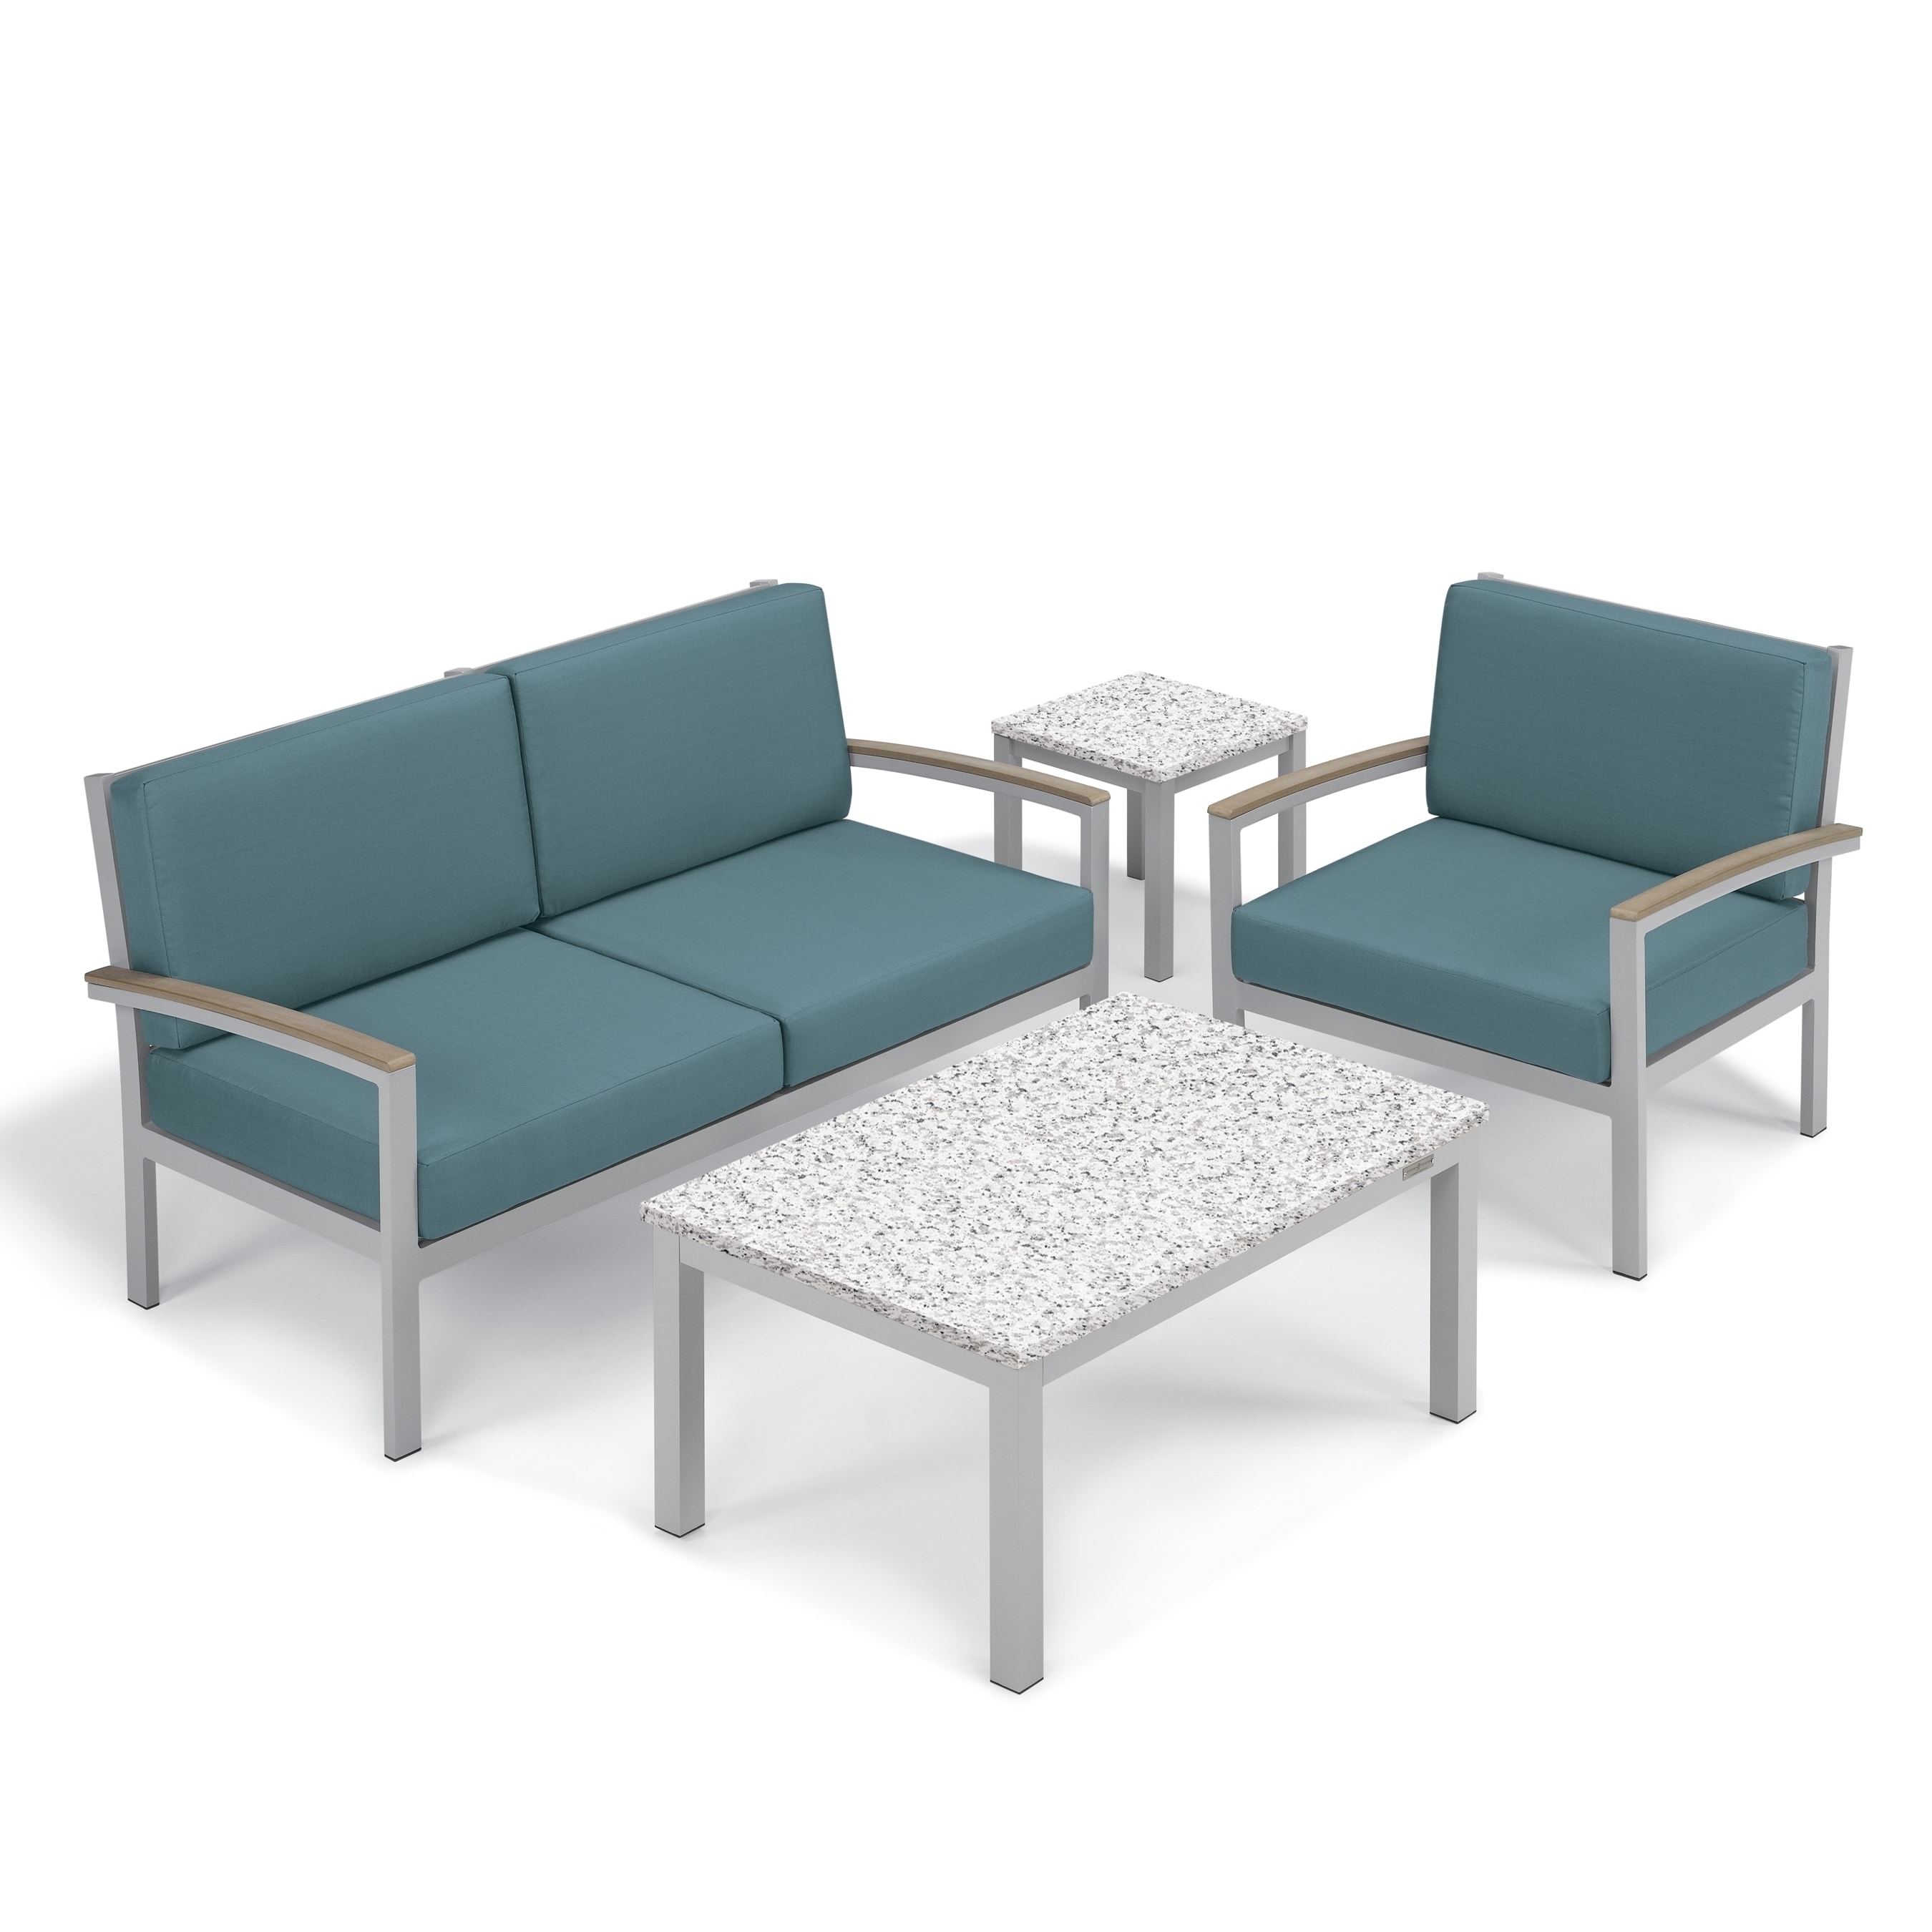 Oxford Garden Travira 4-piece Seat and Lite-core Granite Ash Table Chat Set - Vintage Tekwood Armcaps  Ice Blue Cushion